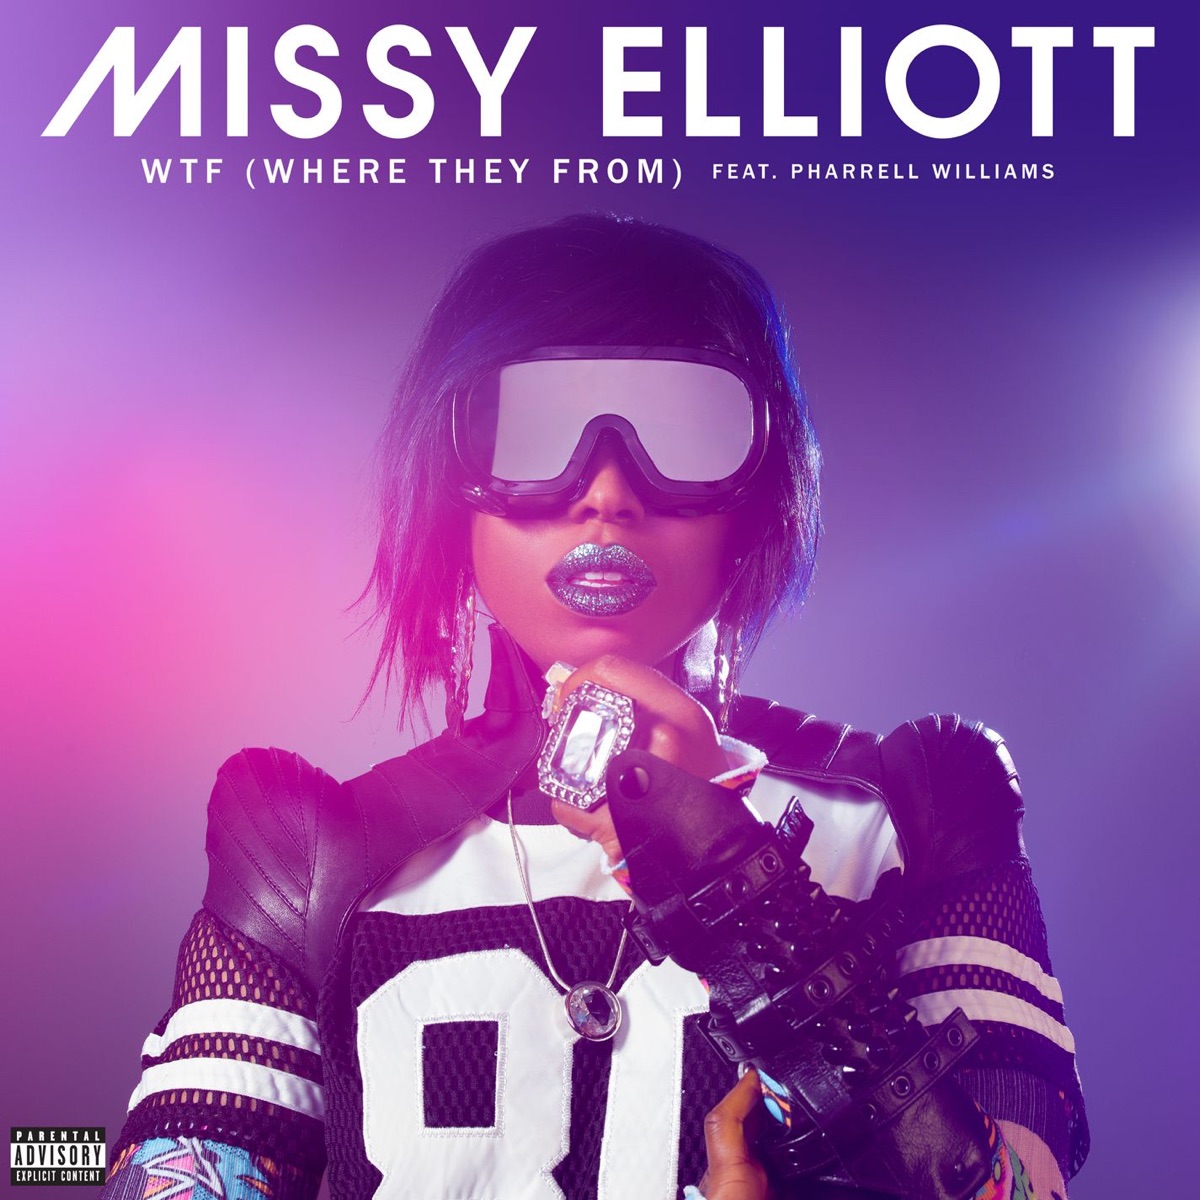 WTF Album Cover by Missy Elliott